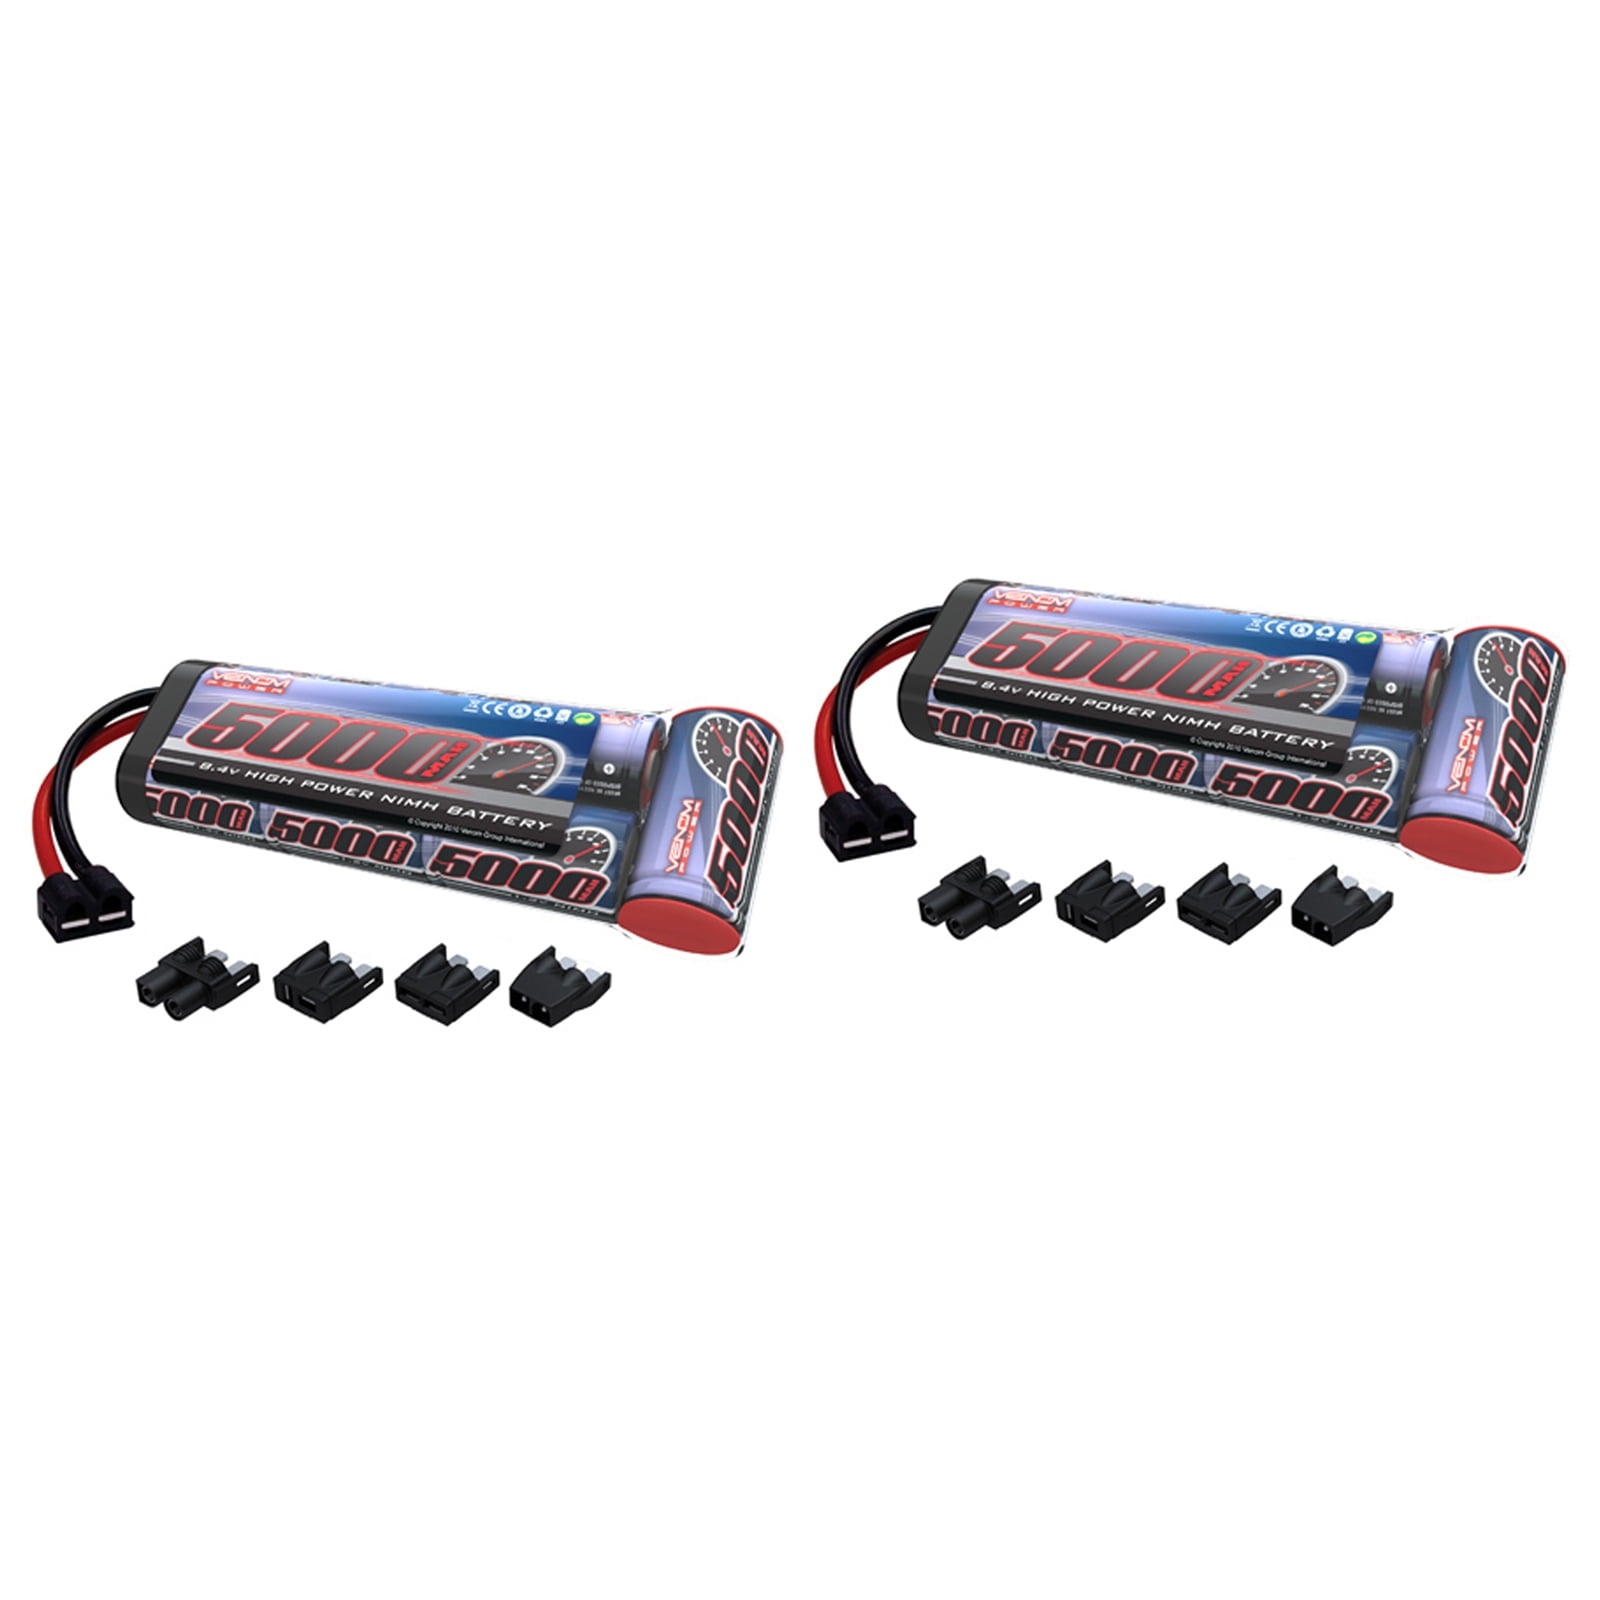 Venom 8.4V 5000mAh 7 Cell NiMH Battery Flat with Universal Plug System x4 Packs 